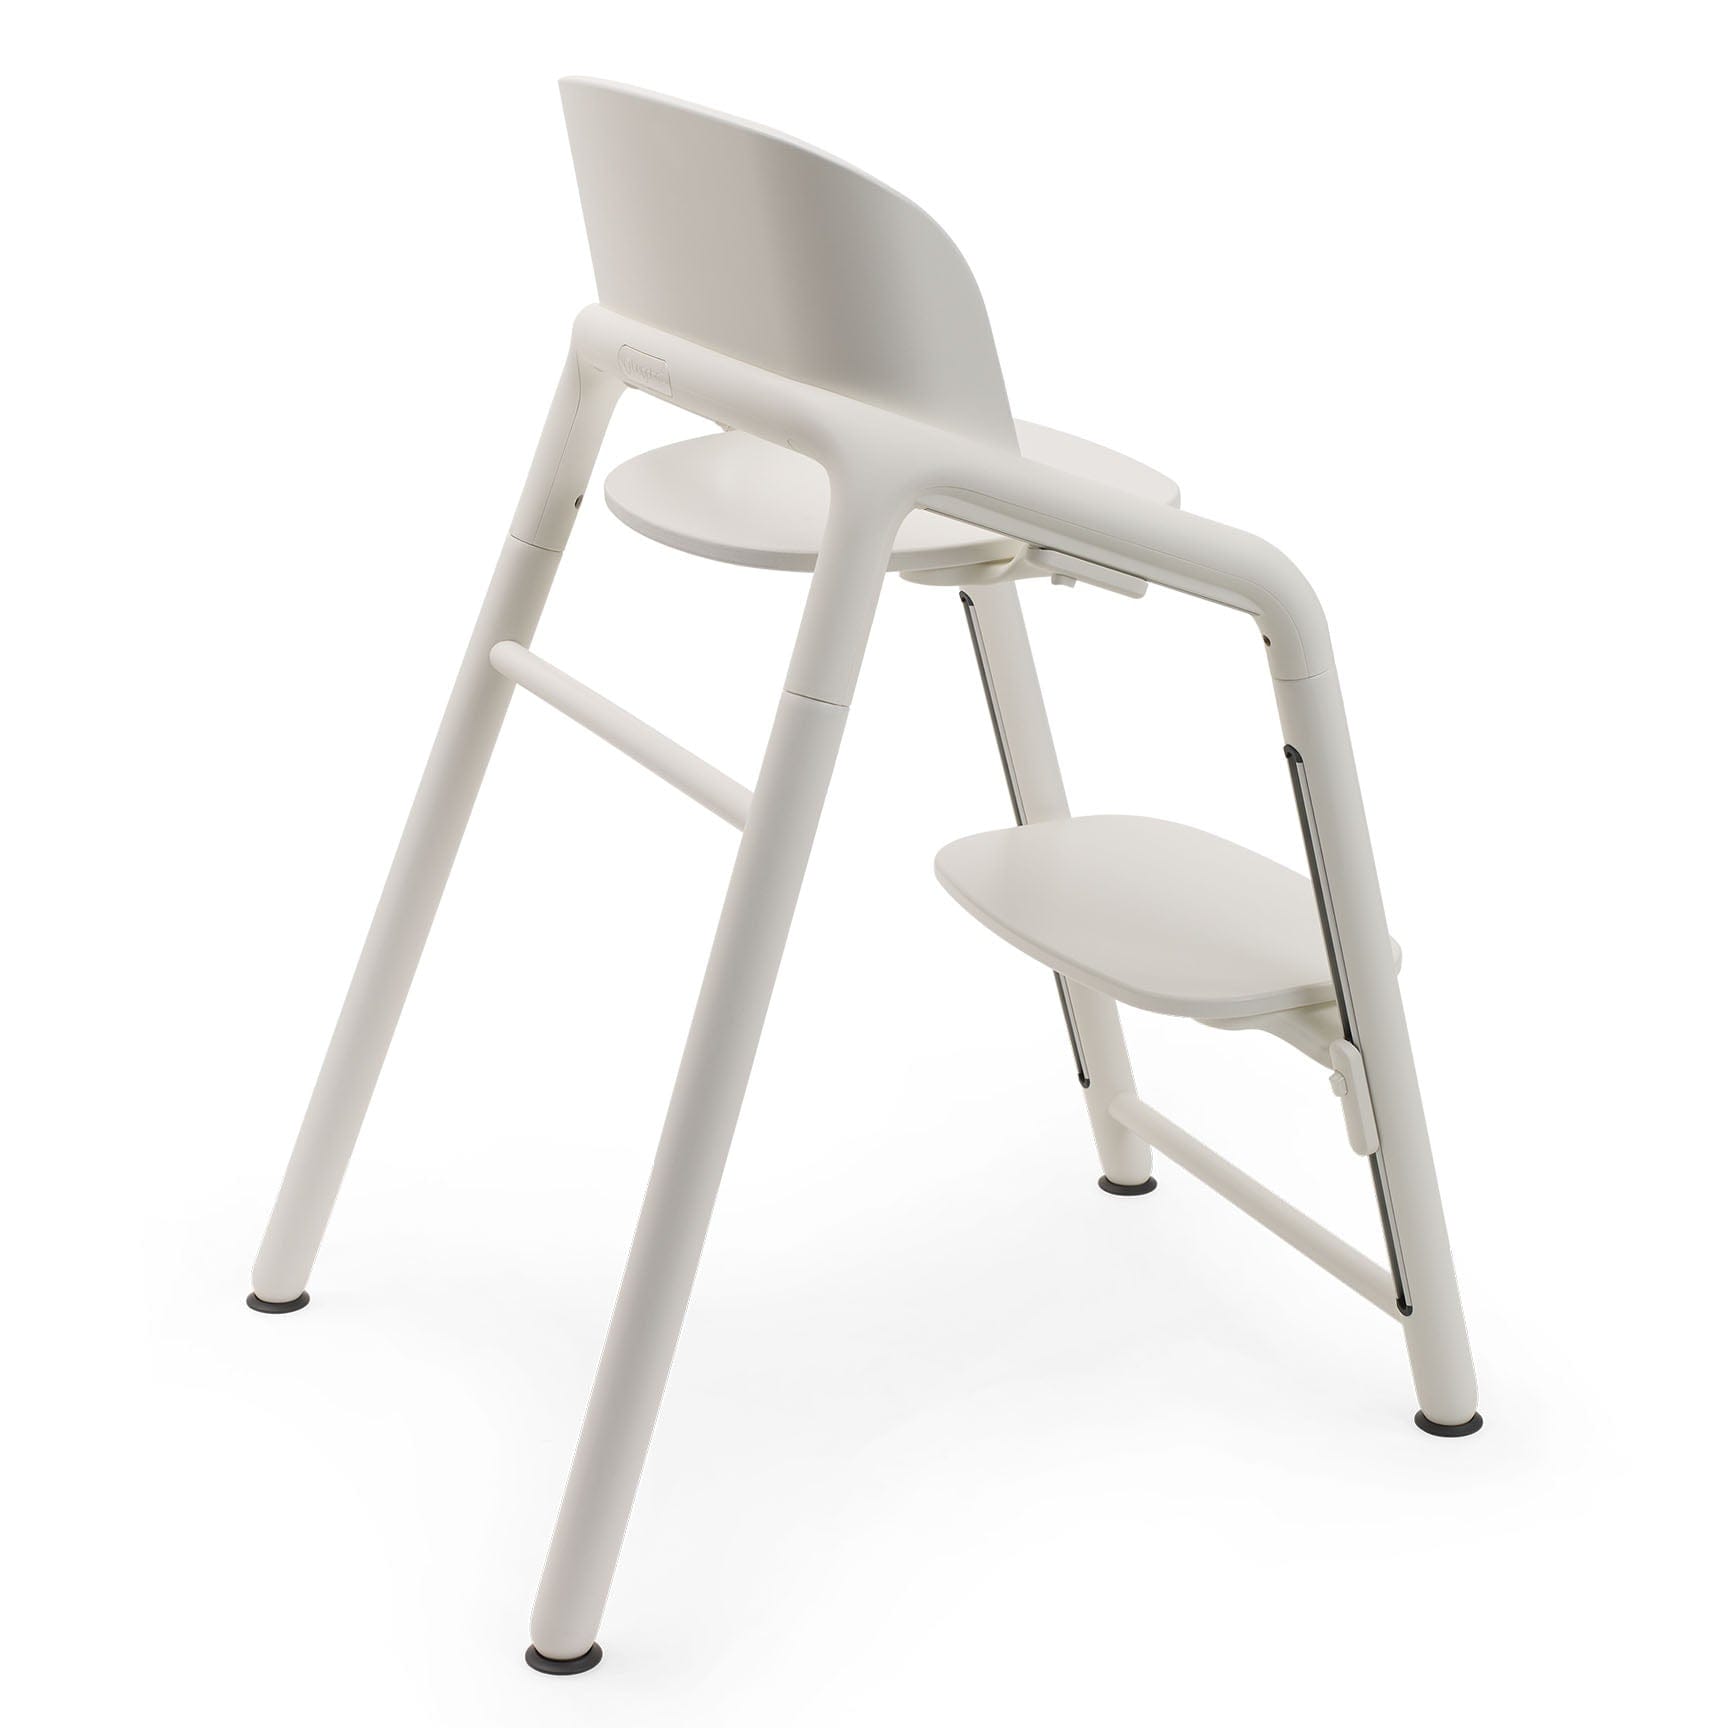 Bugaboo Giraffe High chair in White Baby Highchairs 200001000 8717447323129